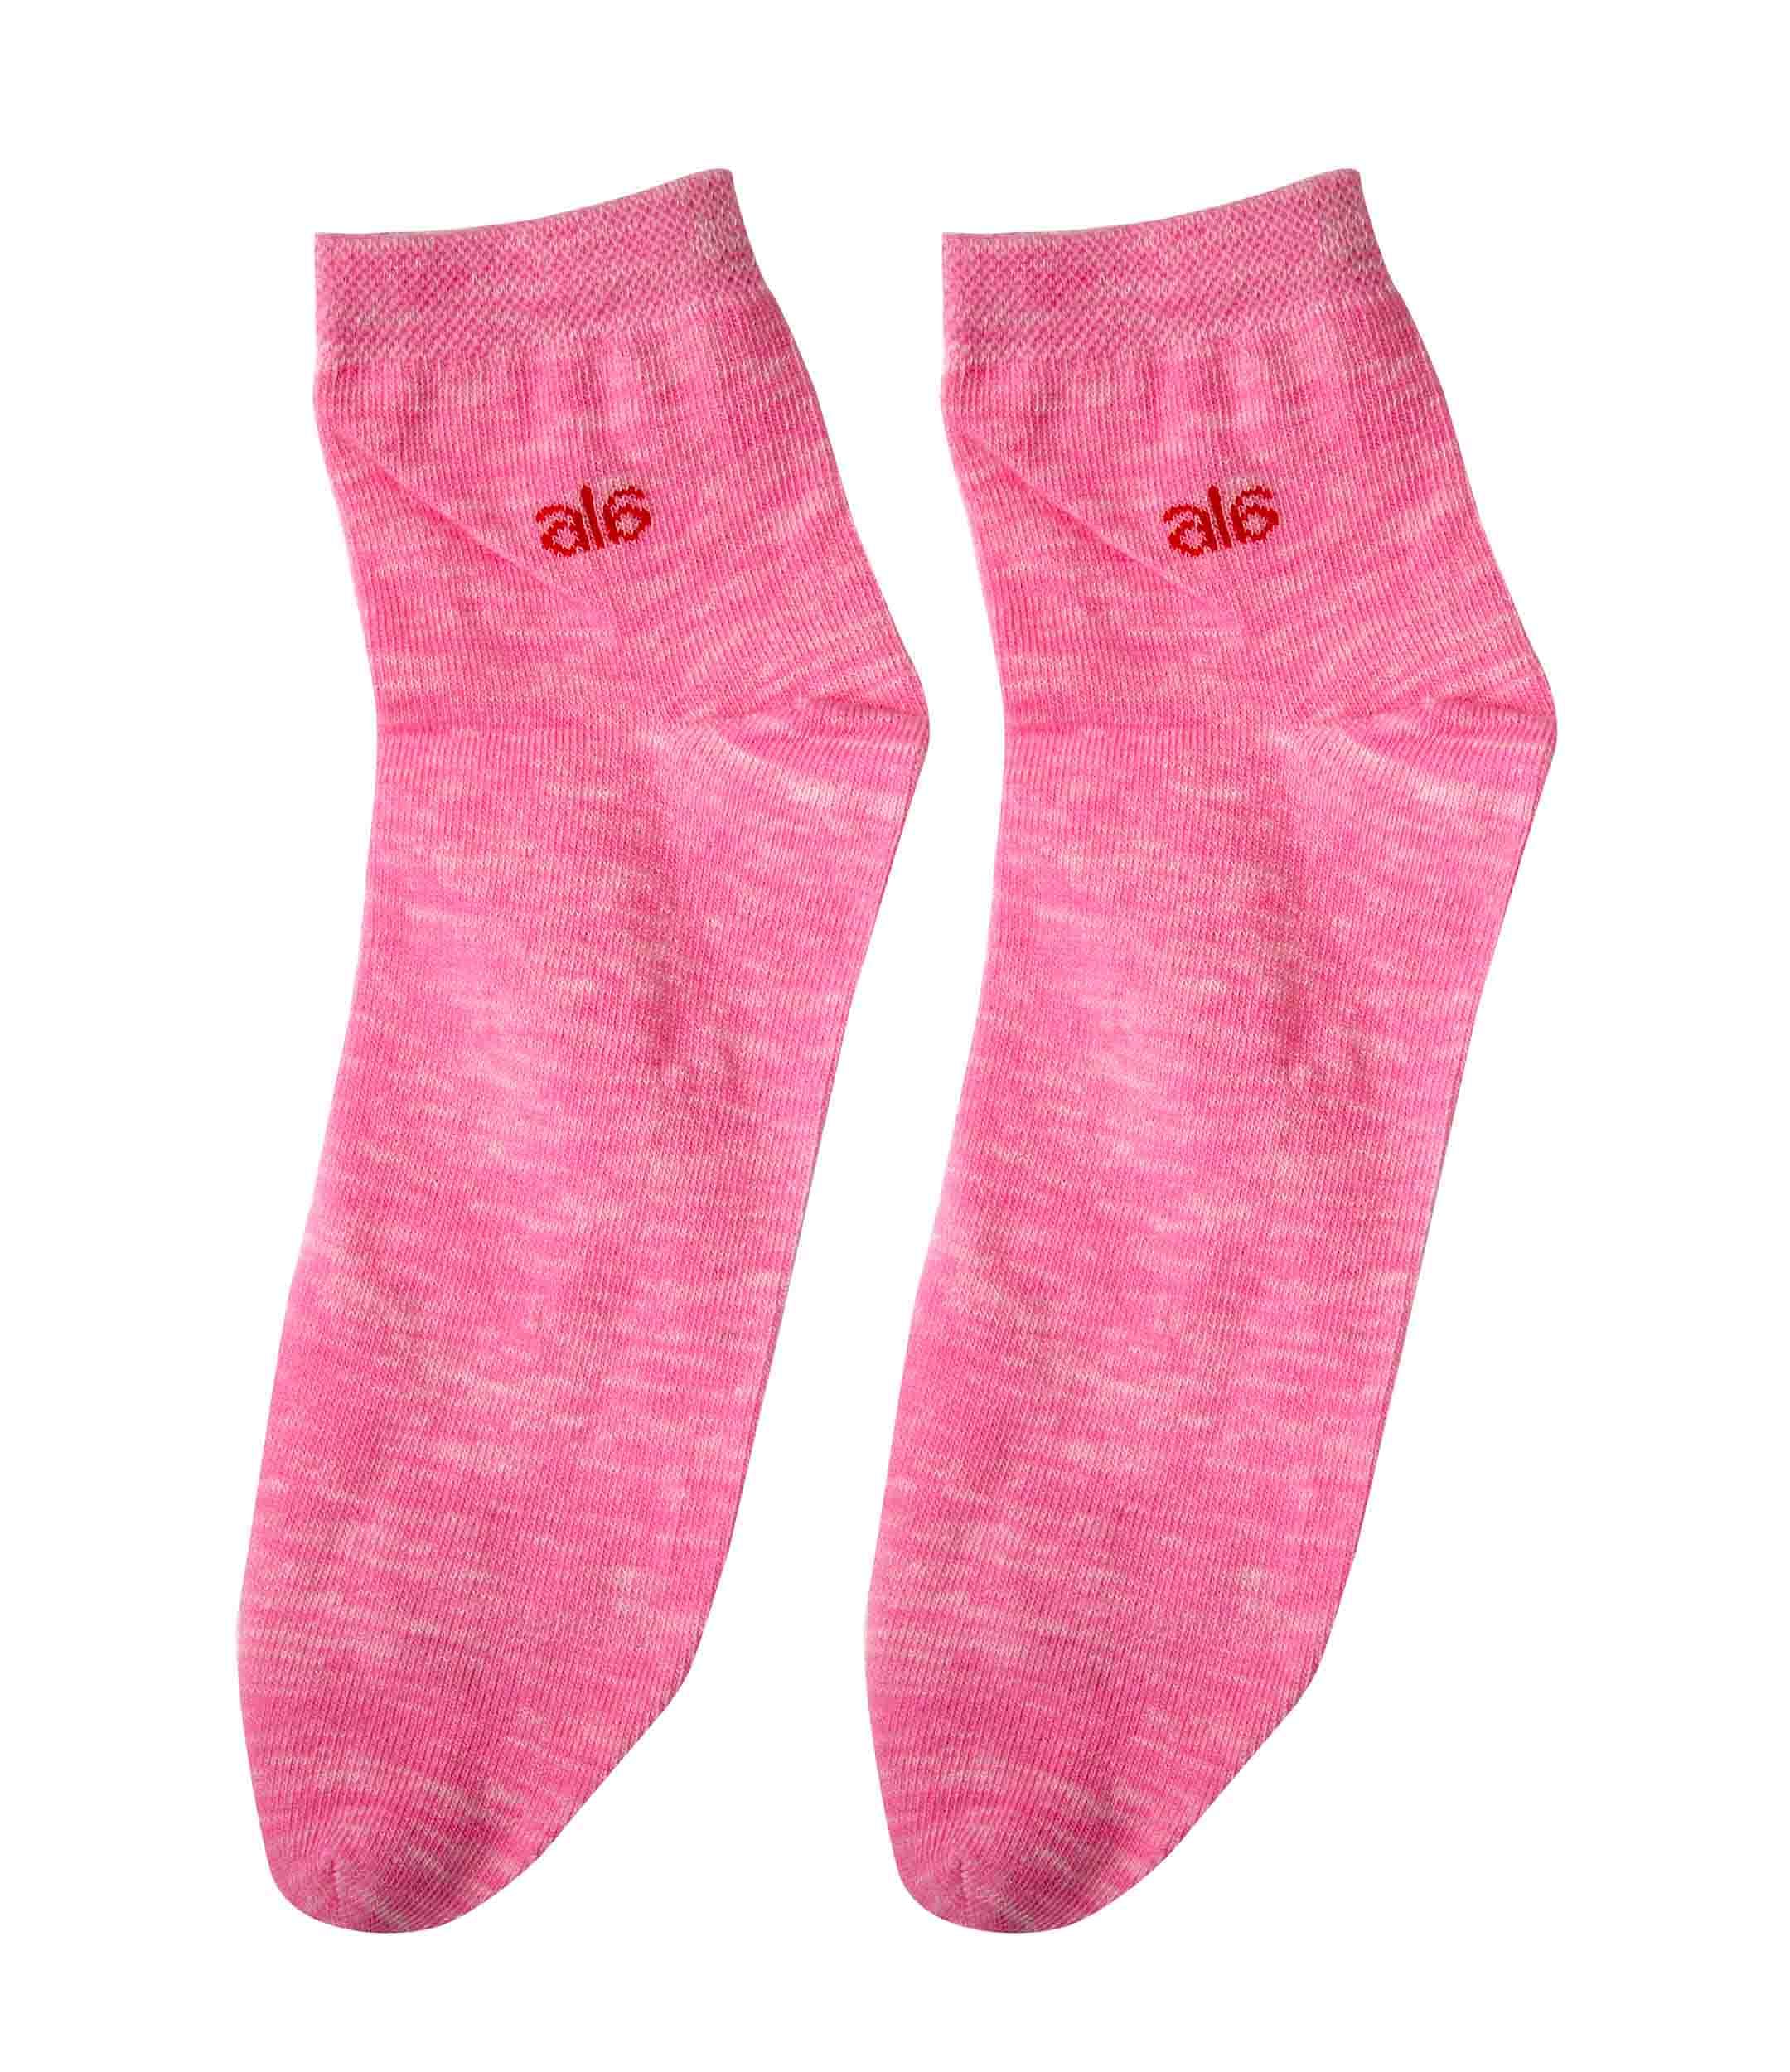 Ellie Wmn ankle Socks - Design-BG-Wmn-DESIGN-007-PNK